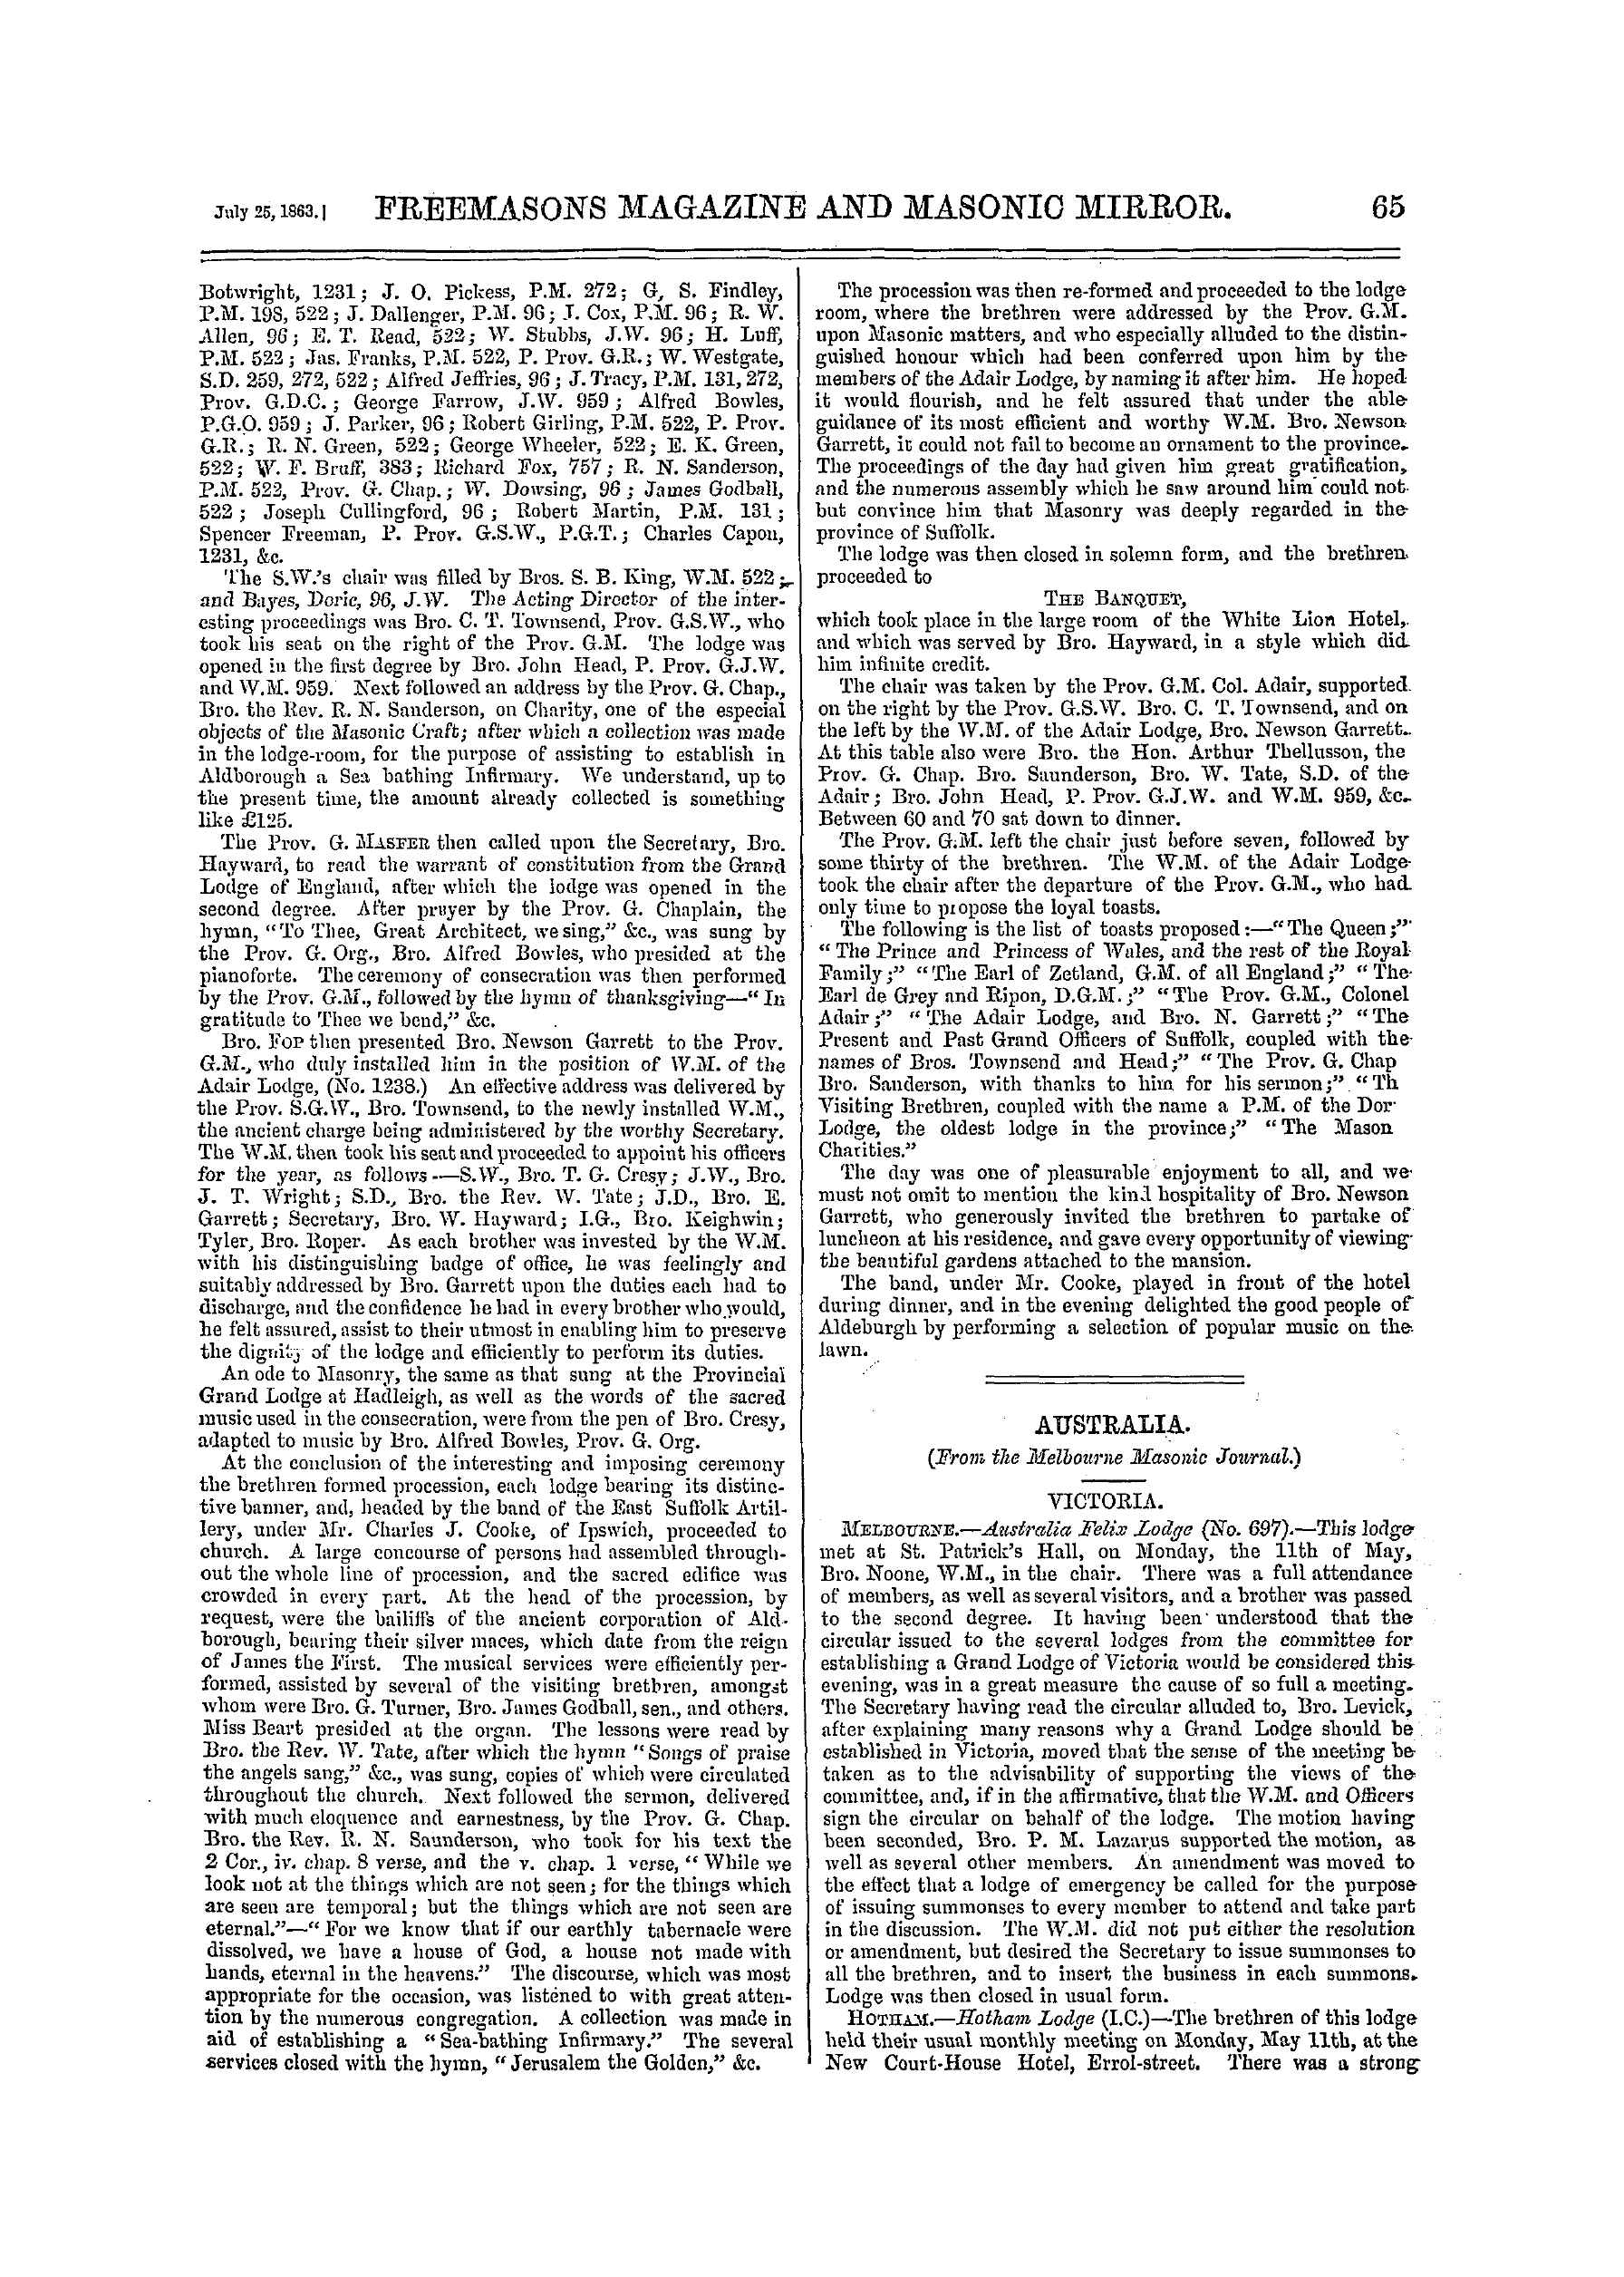 The Freemasons' Monthly Magazine: 1863-07-25 - Australia.